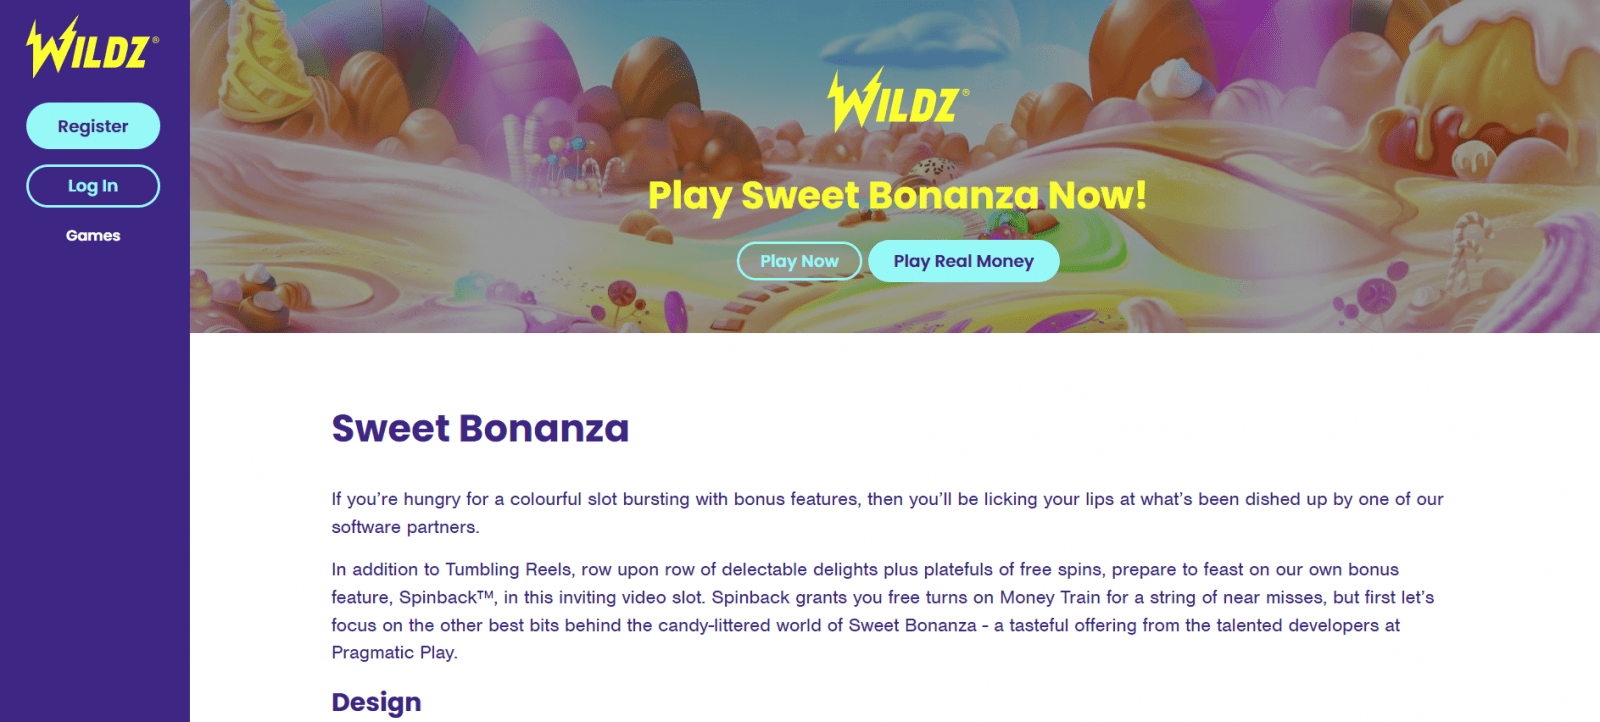 wildz casino online